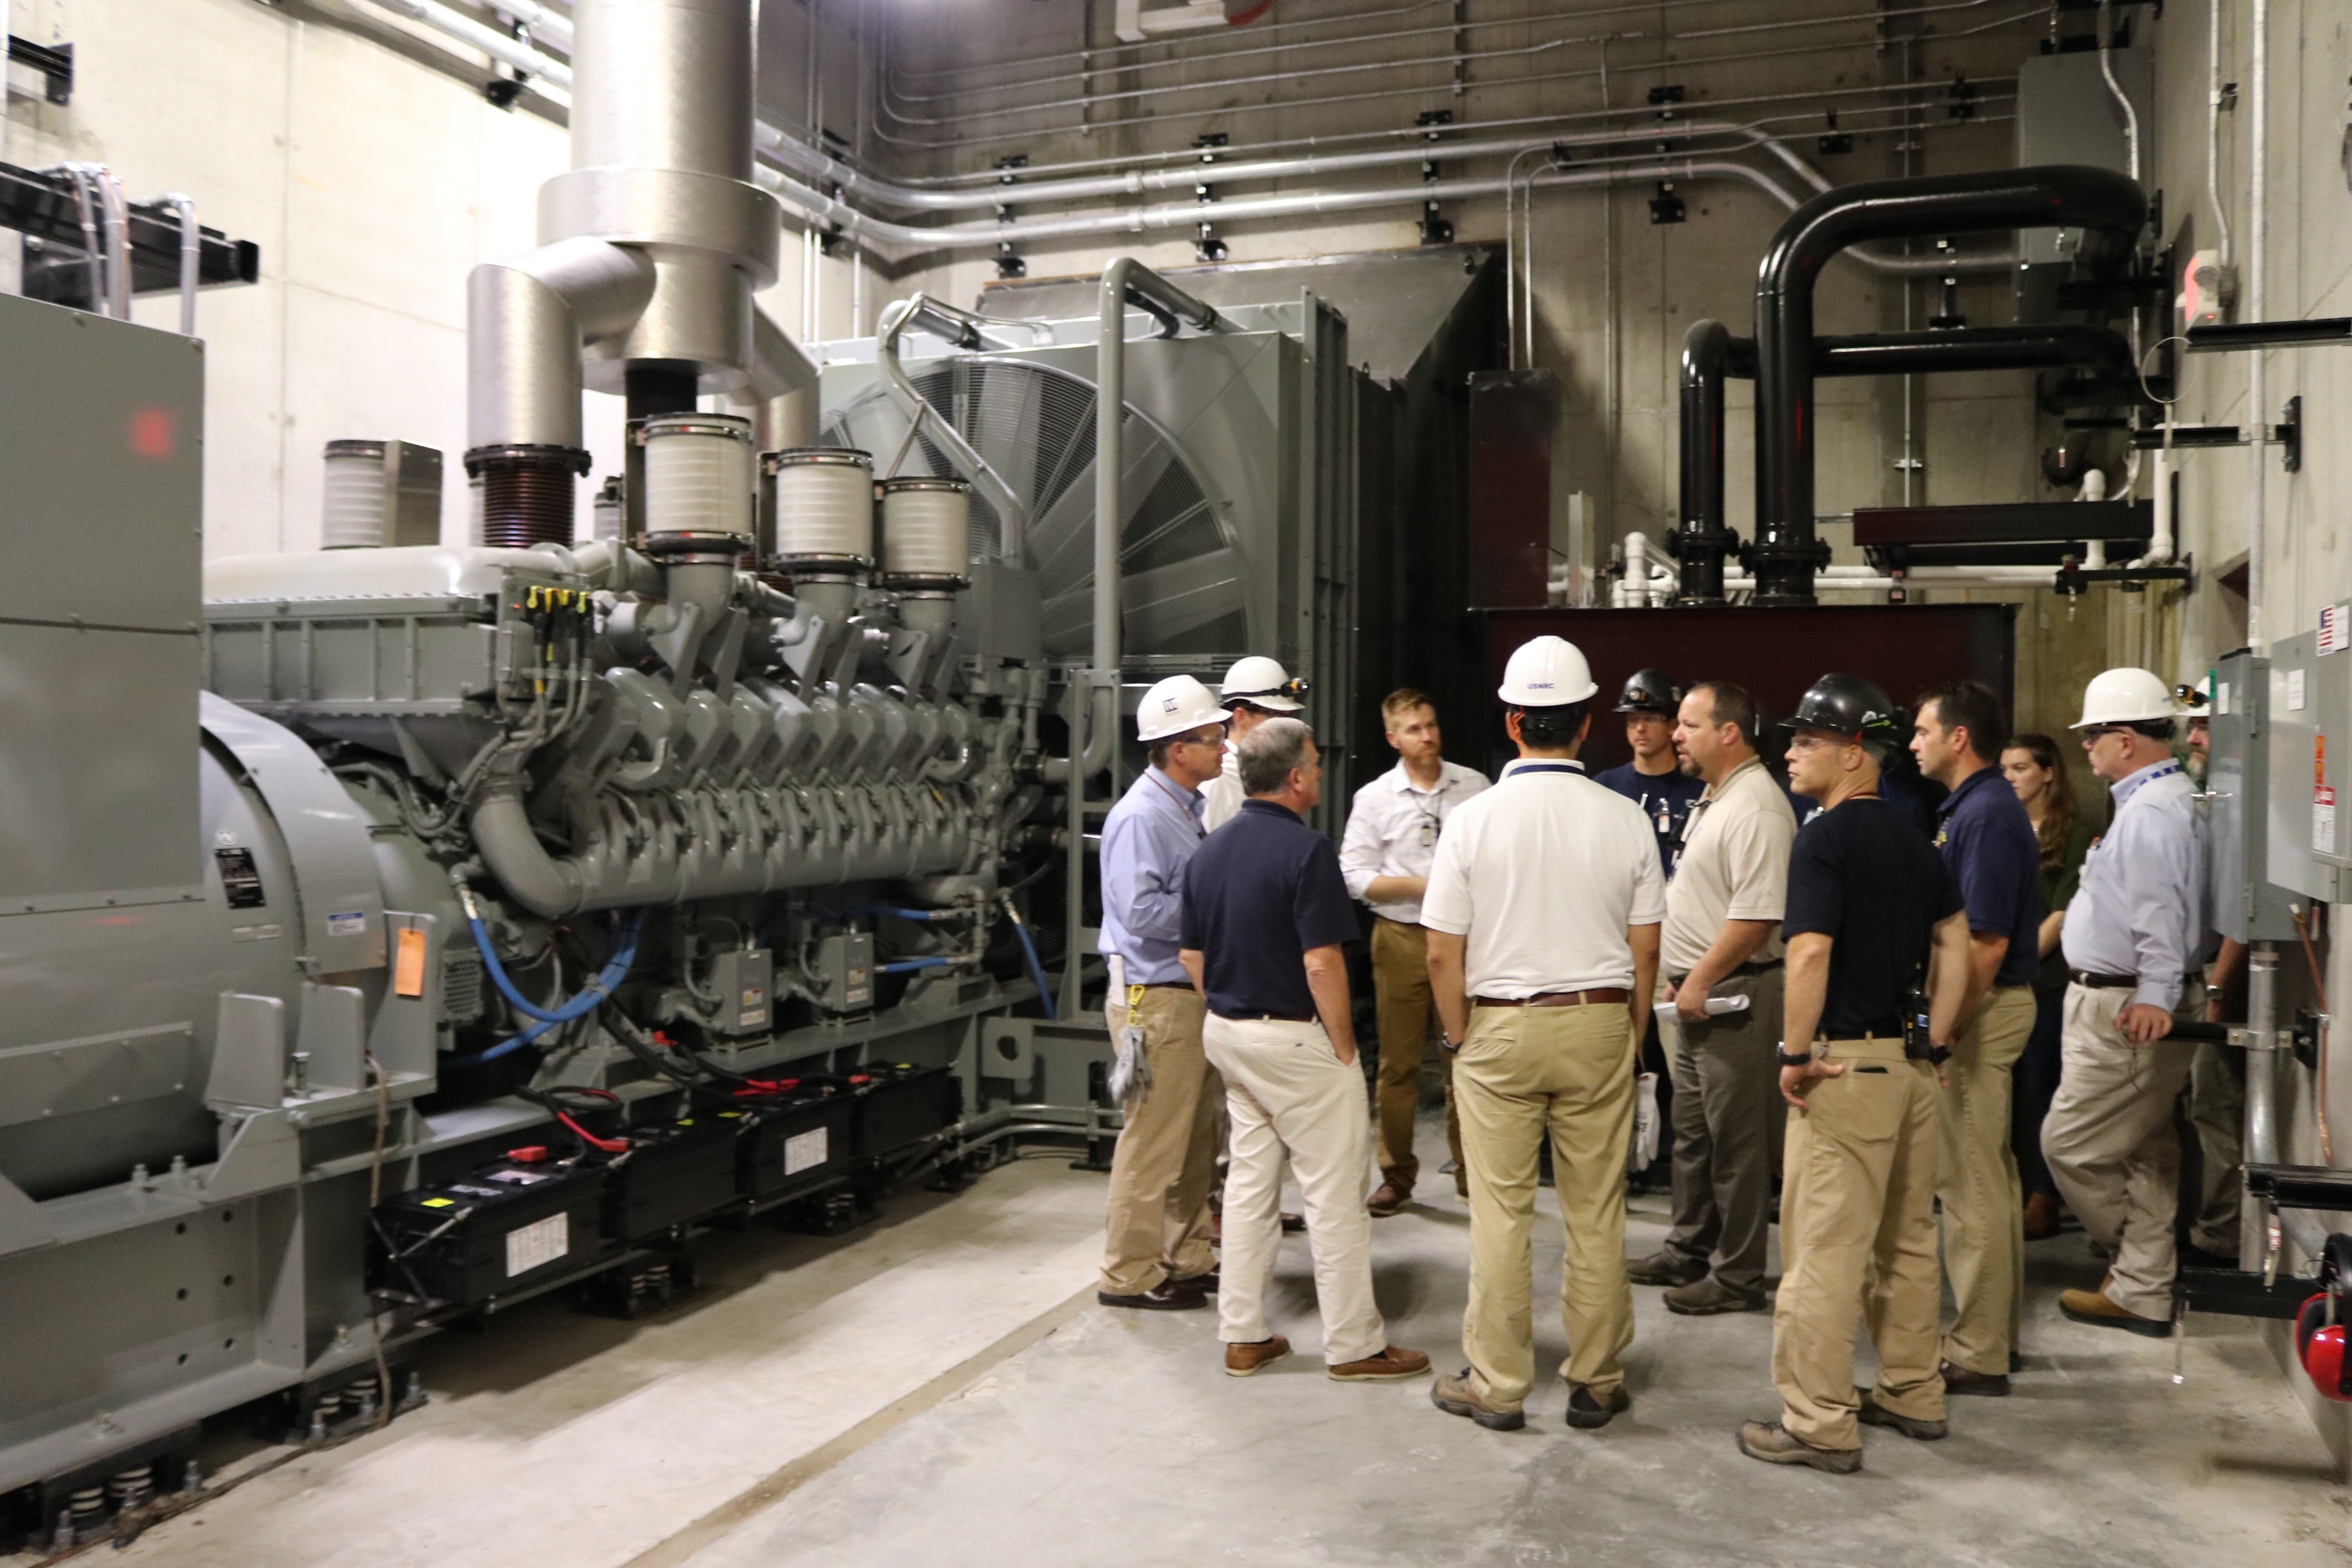 Tour of Four Deisel Generators